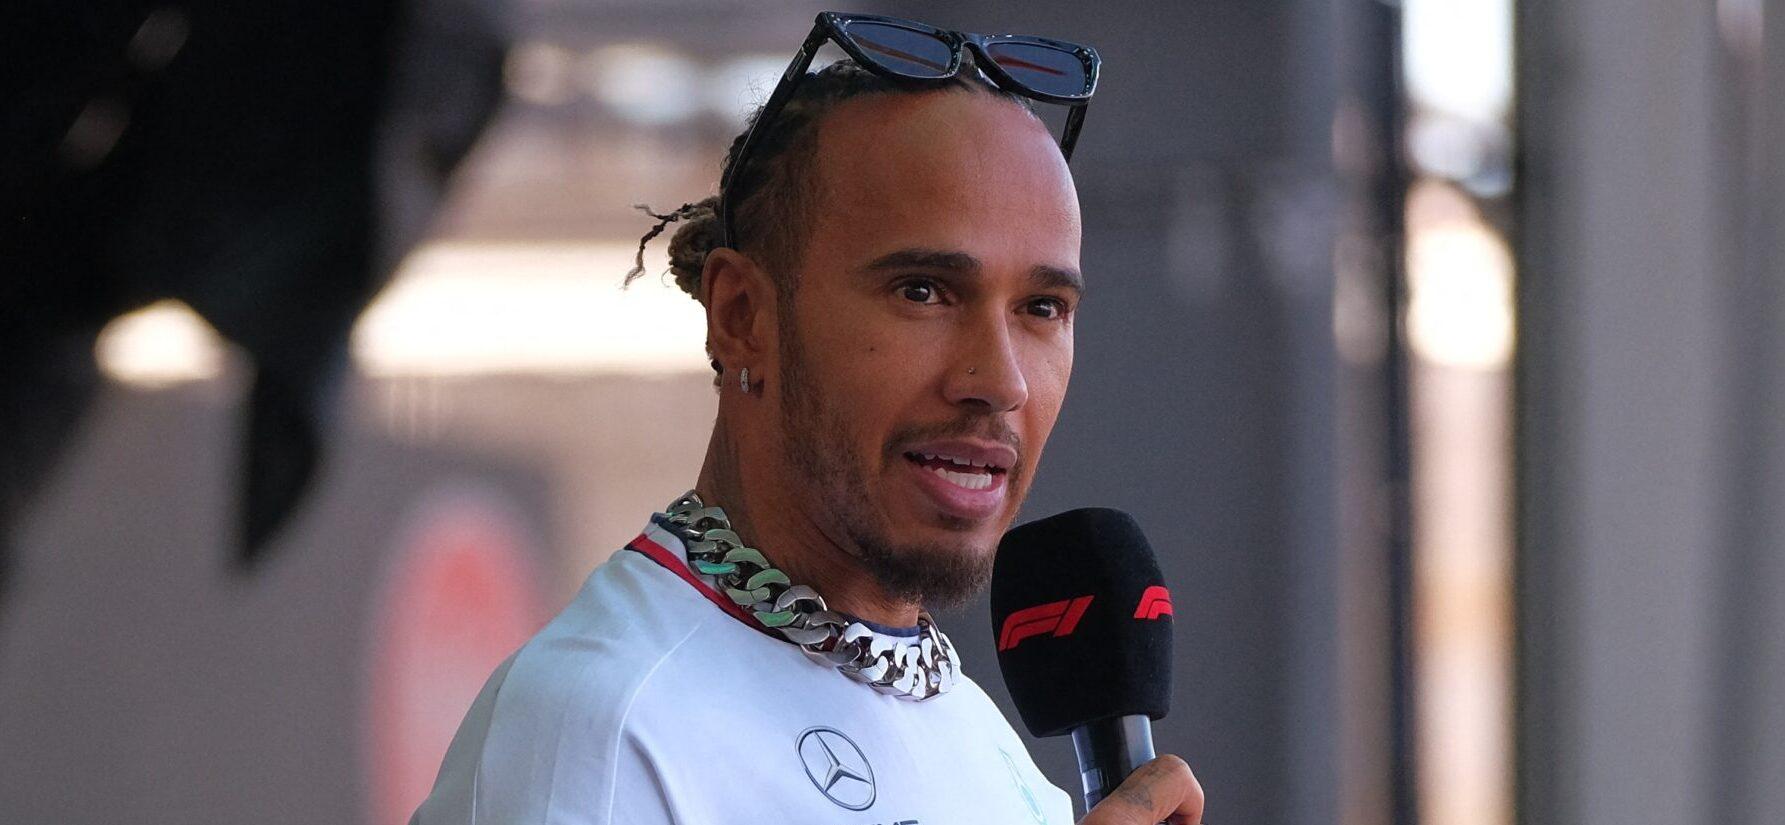 Lewis Hamilton Breaks Silence On Austin Grand Prix Disqualification As Fans React